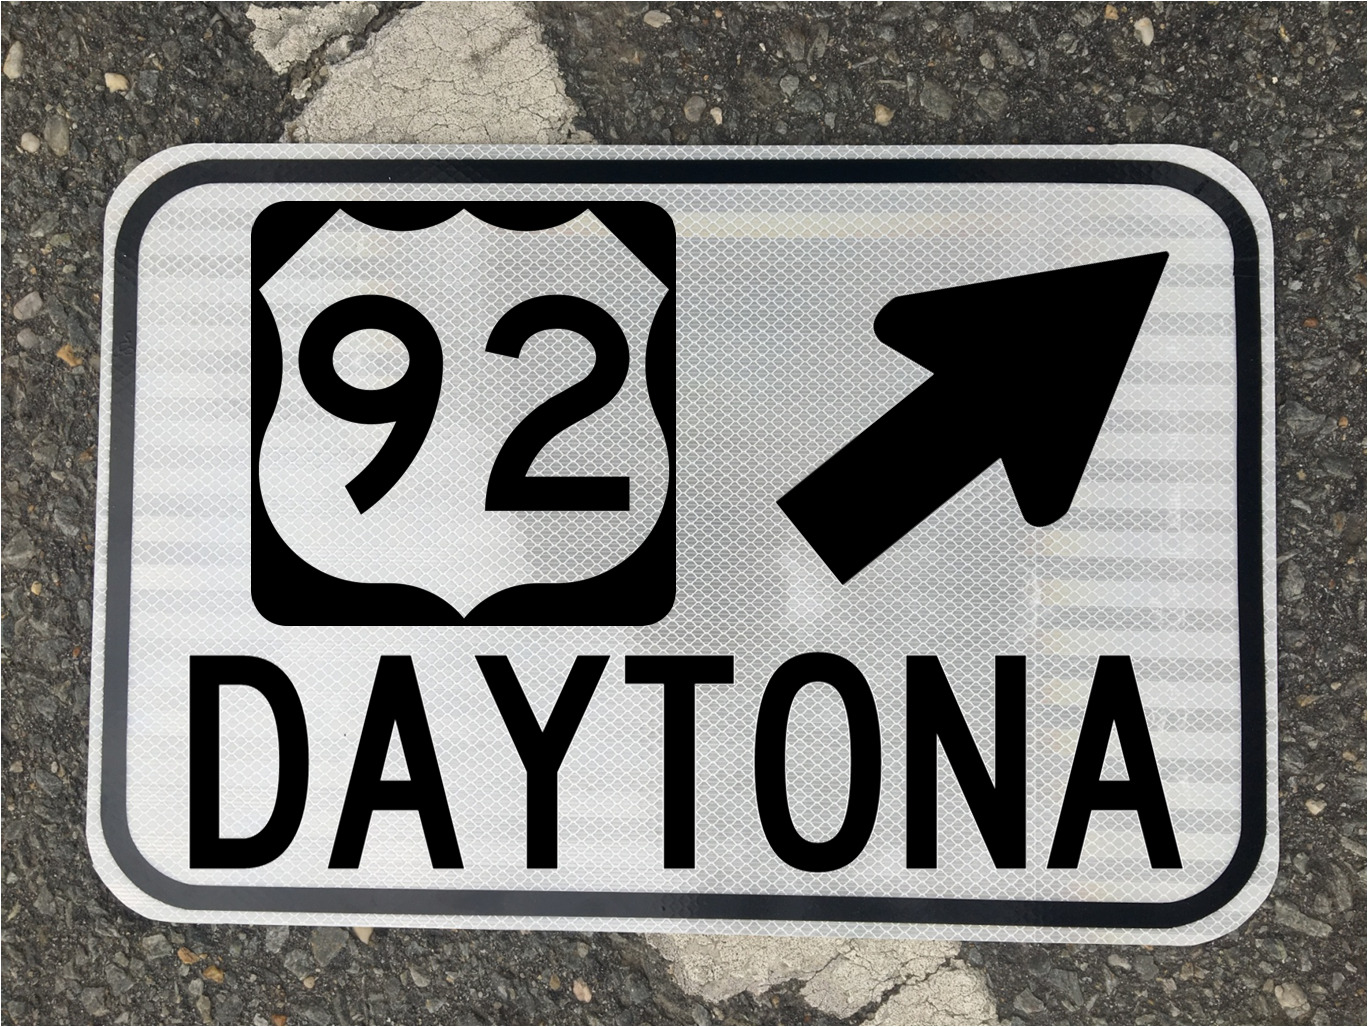 DAYTONA Florida US 92 Highway road sign NASCAR race - 12\